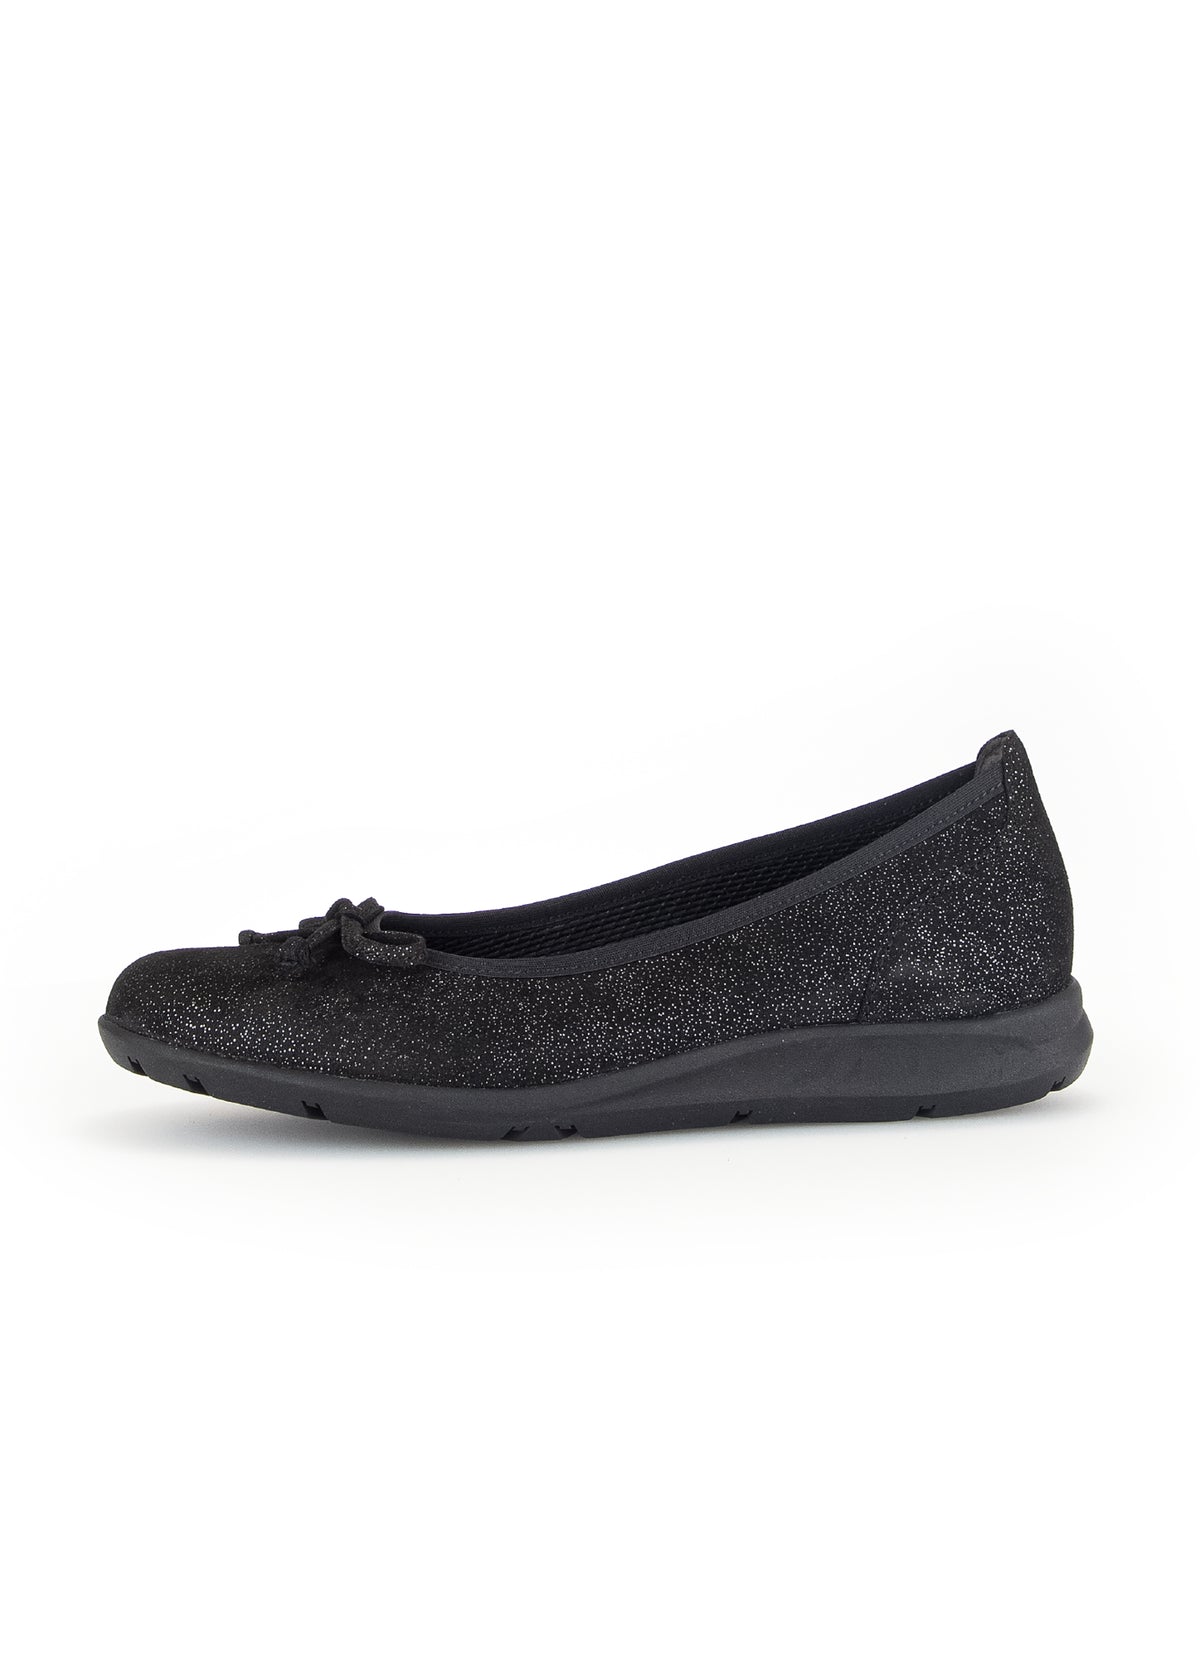 Bow ballerina shoes - shiny black leather